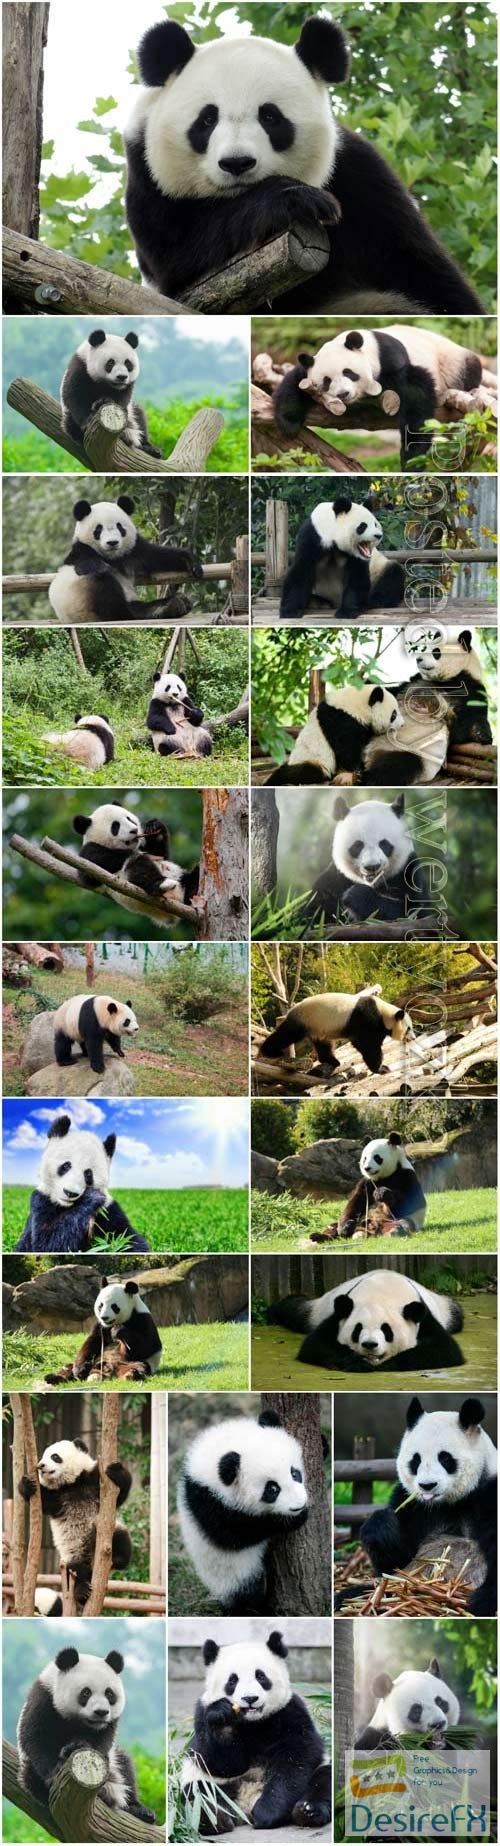 Cute pandas stock photo